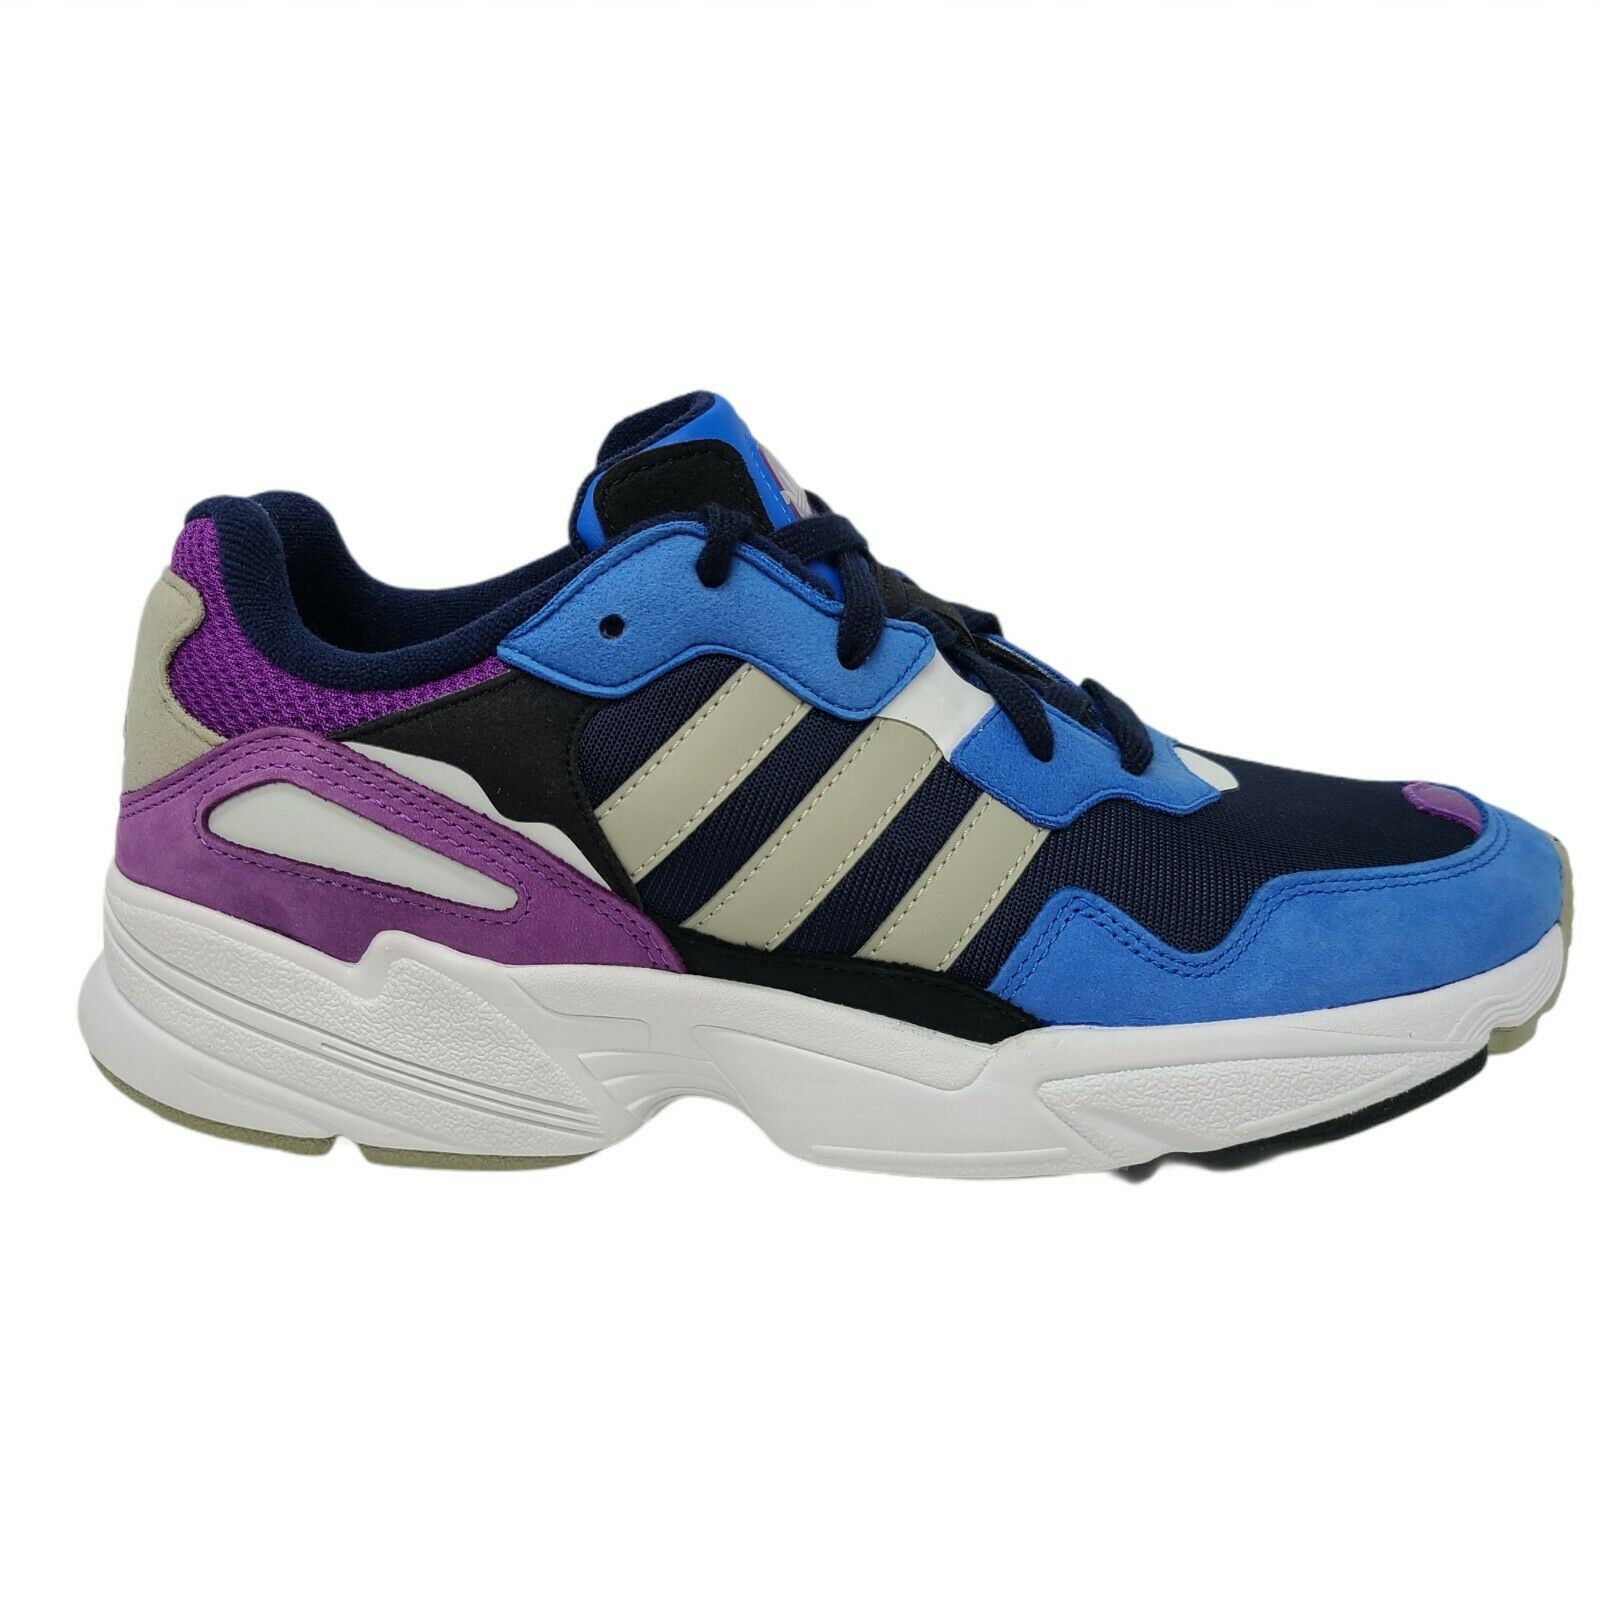 Adidas Yung-96 Blue Purple Black White Men's Shoes Size 10 Fashion Athletic